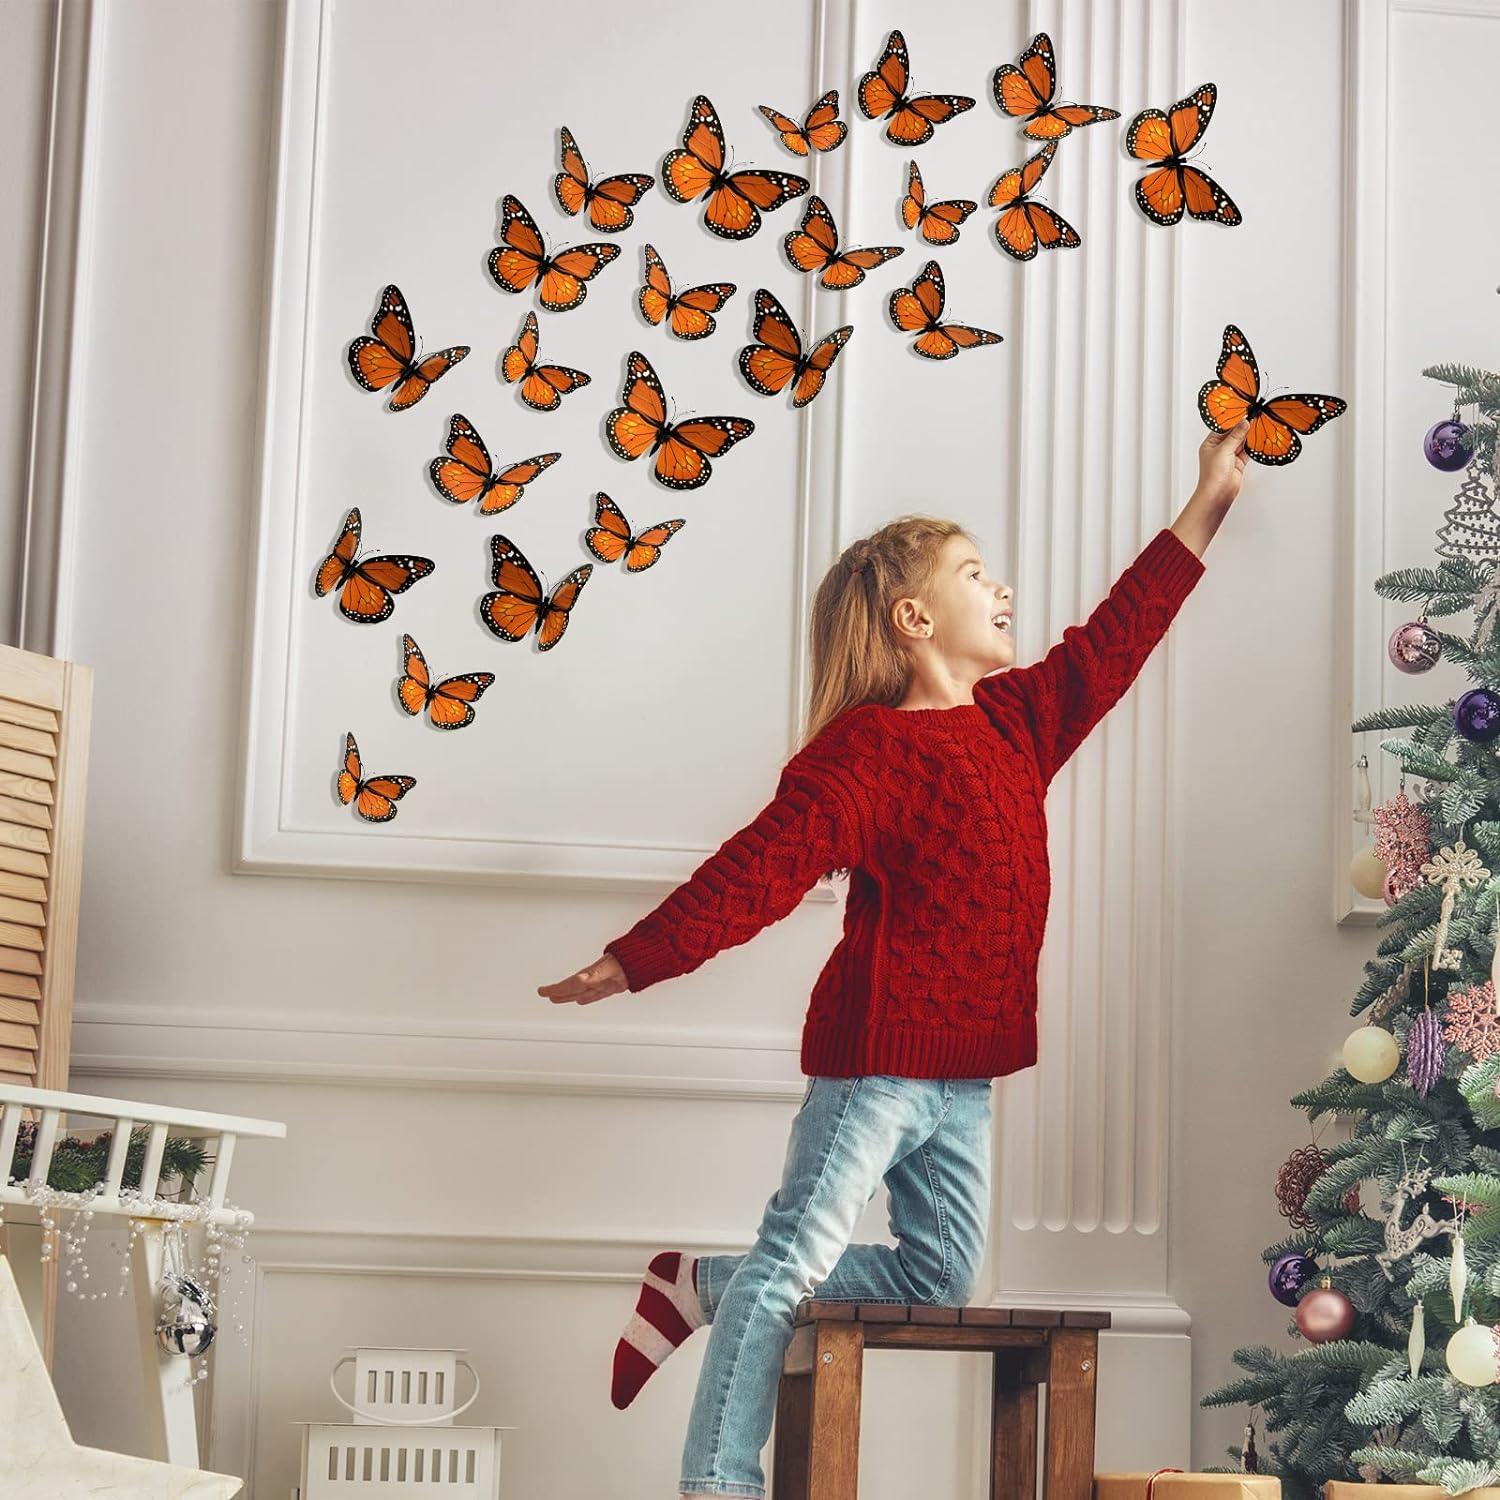 Decoración de mariposa monarca para manualidades, pared de mariposa artificial, - VIRTUAL MUEBLES